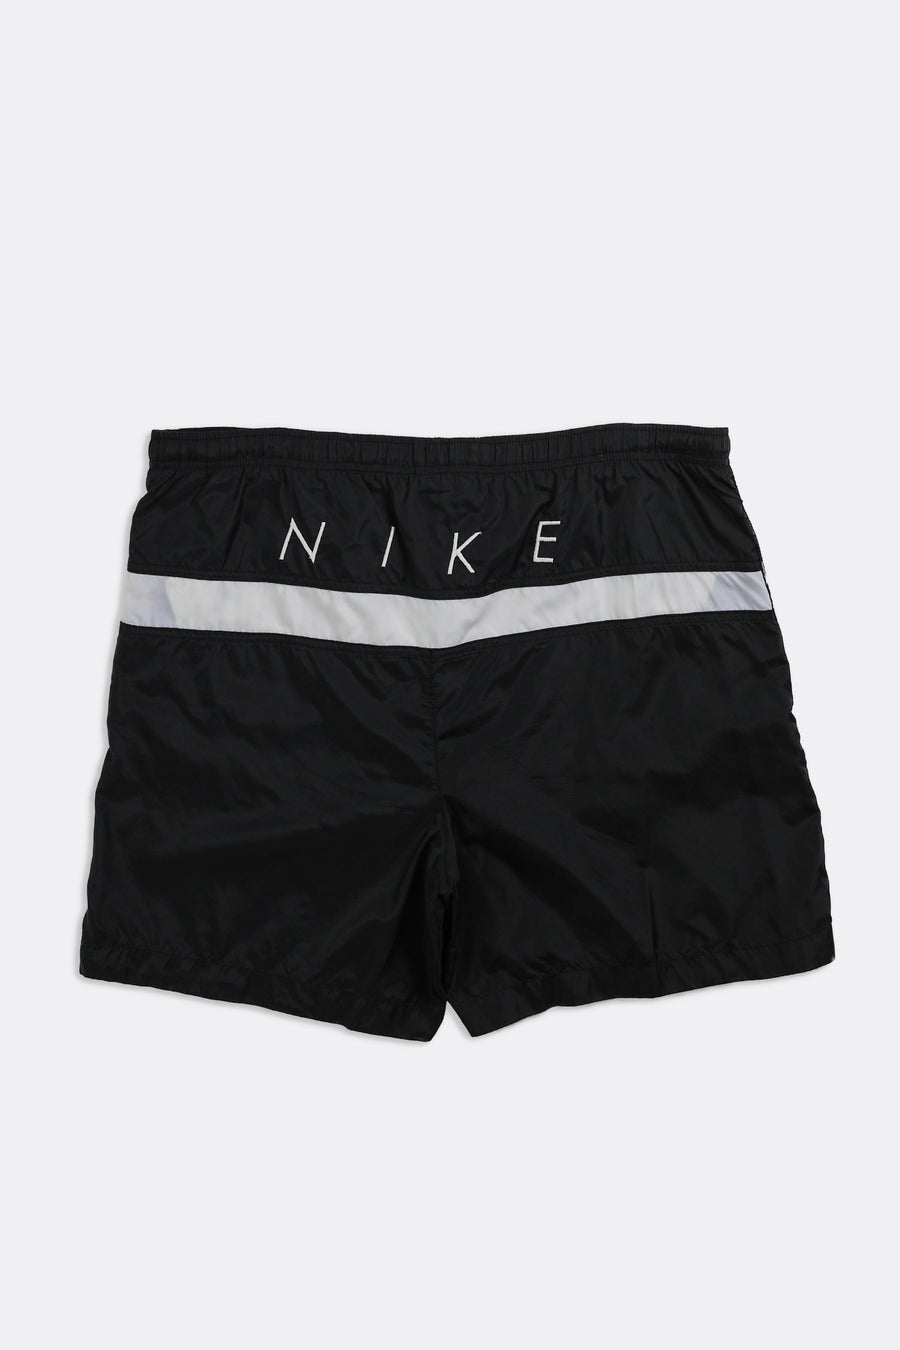 Vintage Nike Windbreaker Shorts - L